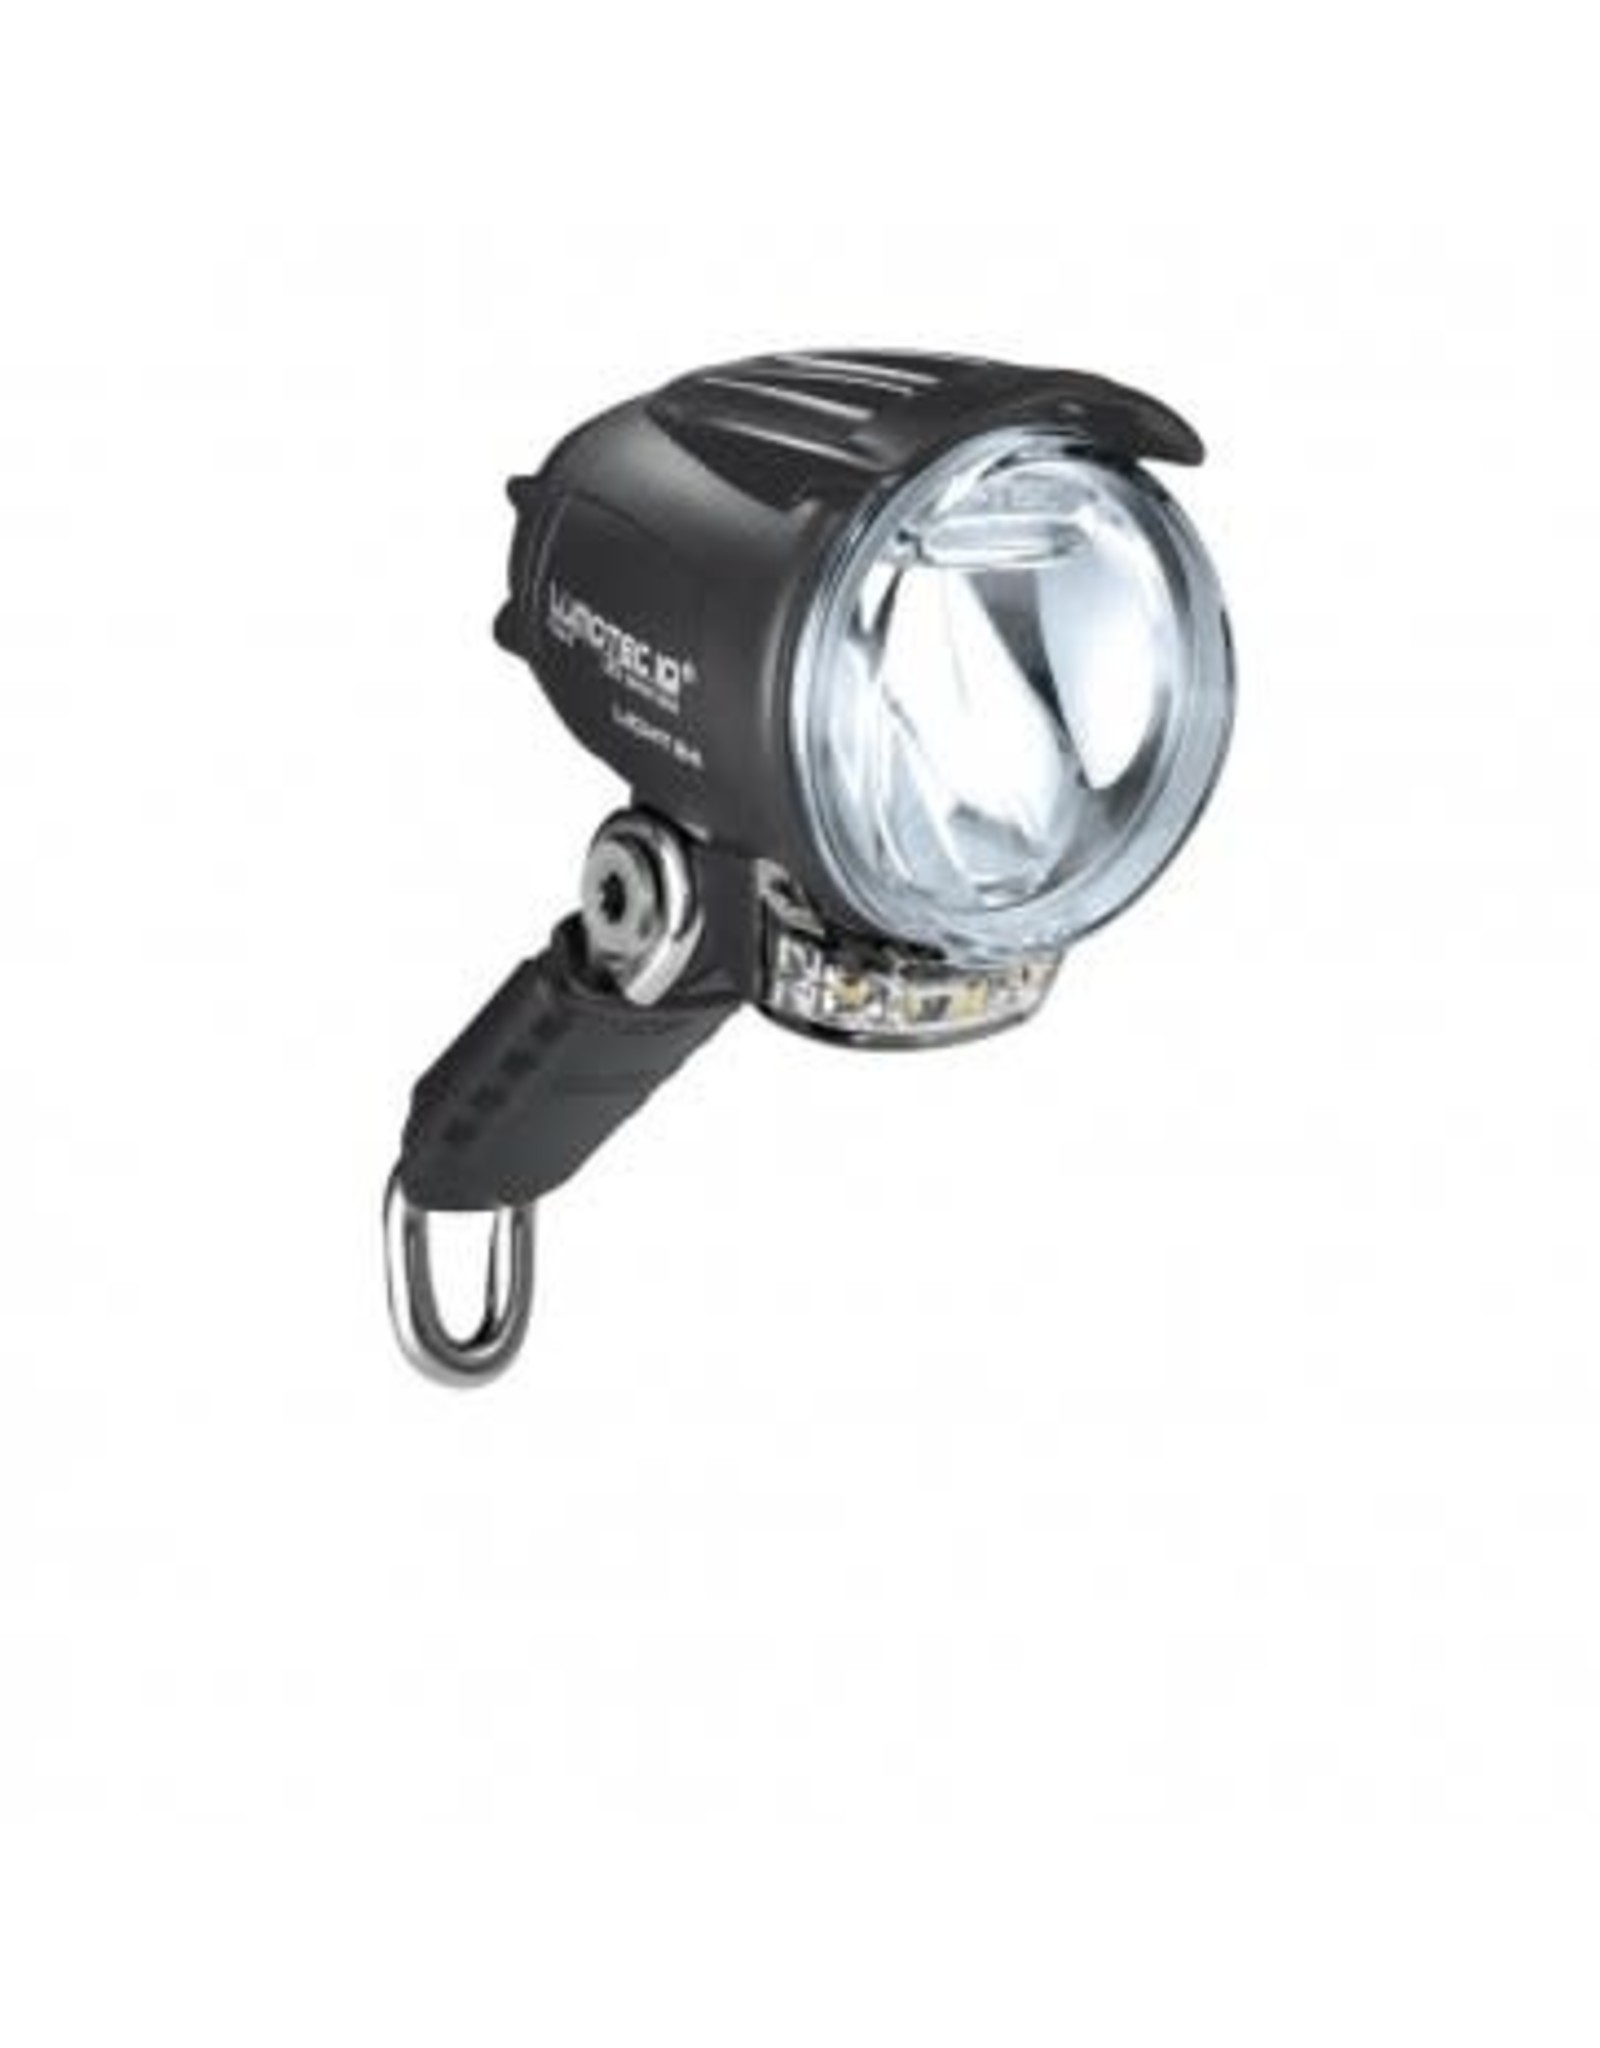 B&M Busch & Muller Lumotec CYO Premium Senso Plus Dynamo Headlight 80 Lux